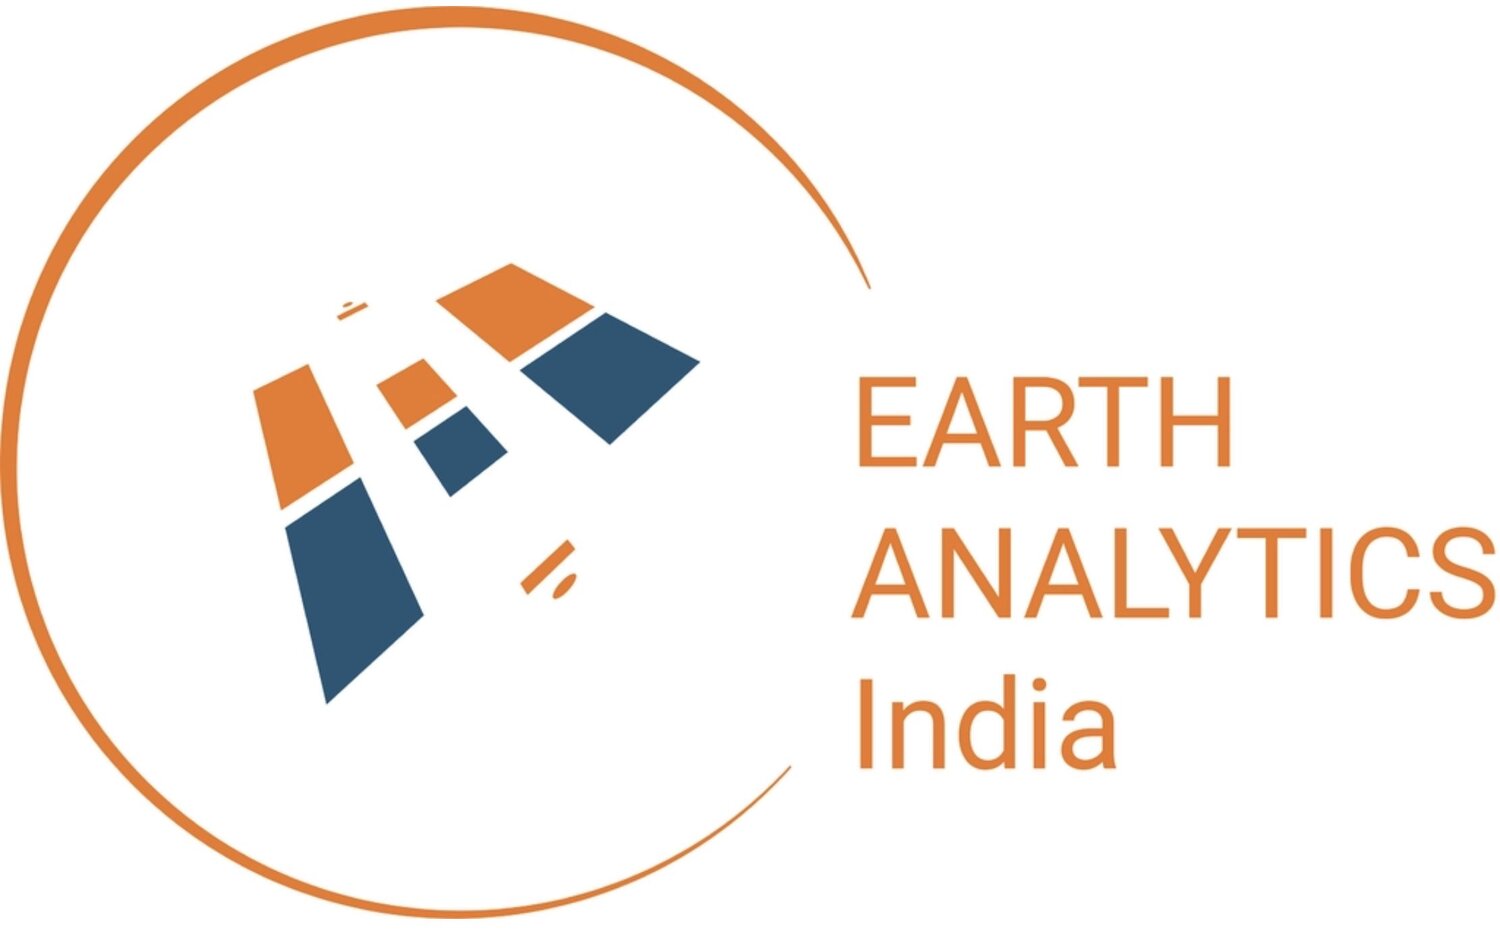 Earth Analytics India